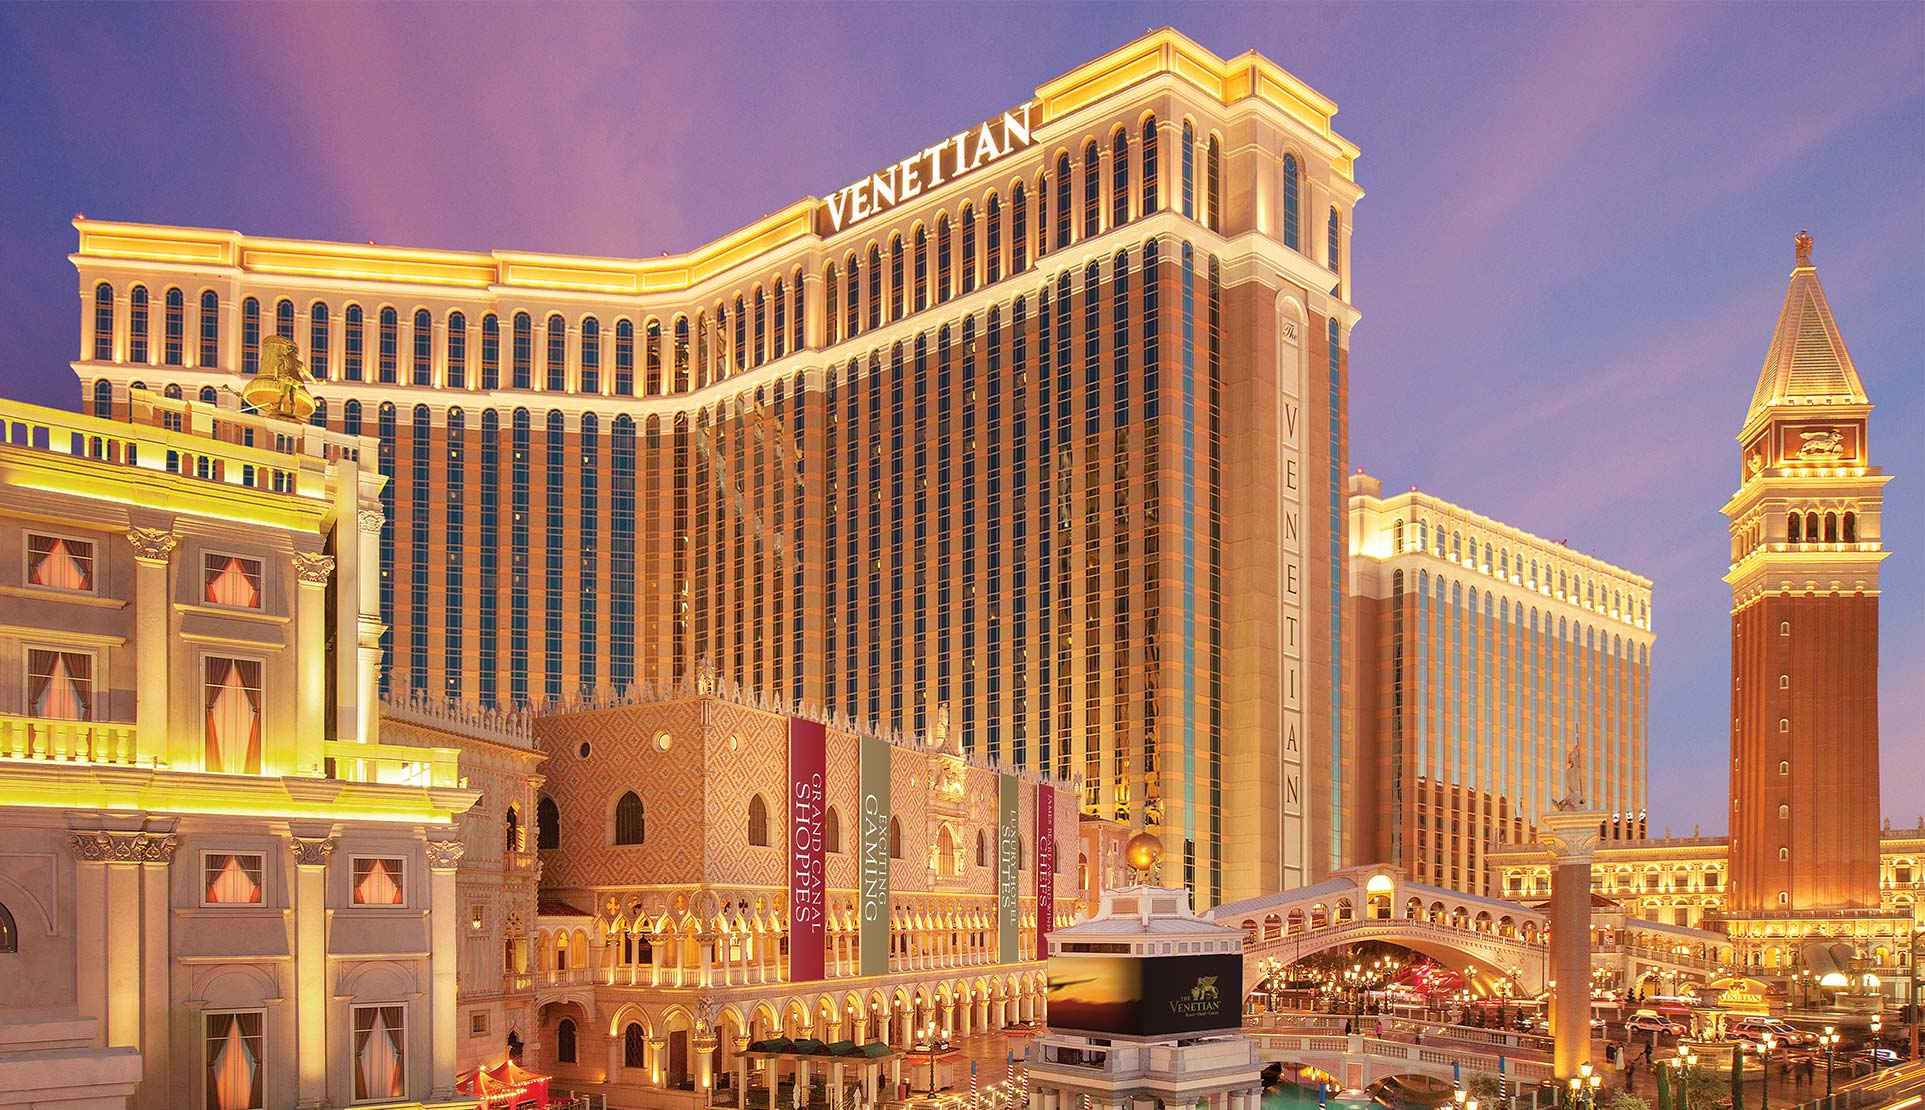 Venetian Hiring Poker Dealers for Summer Work in Las Vegas